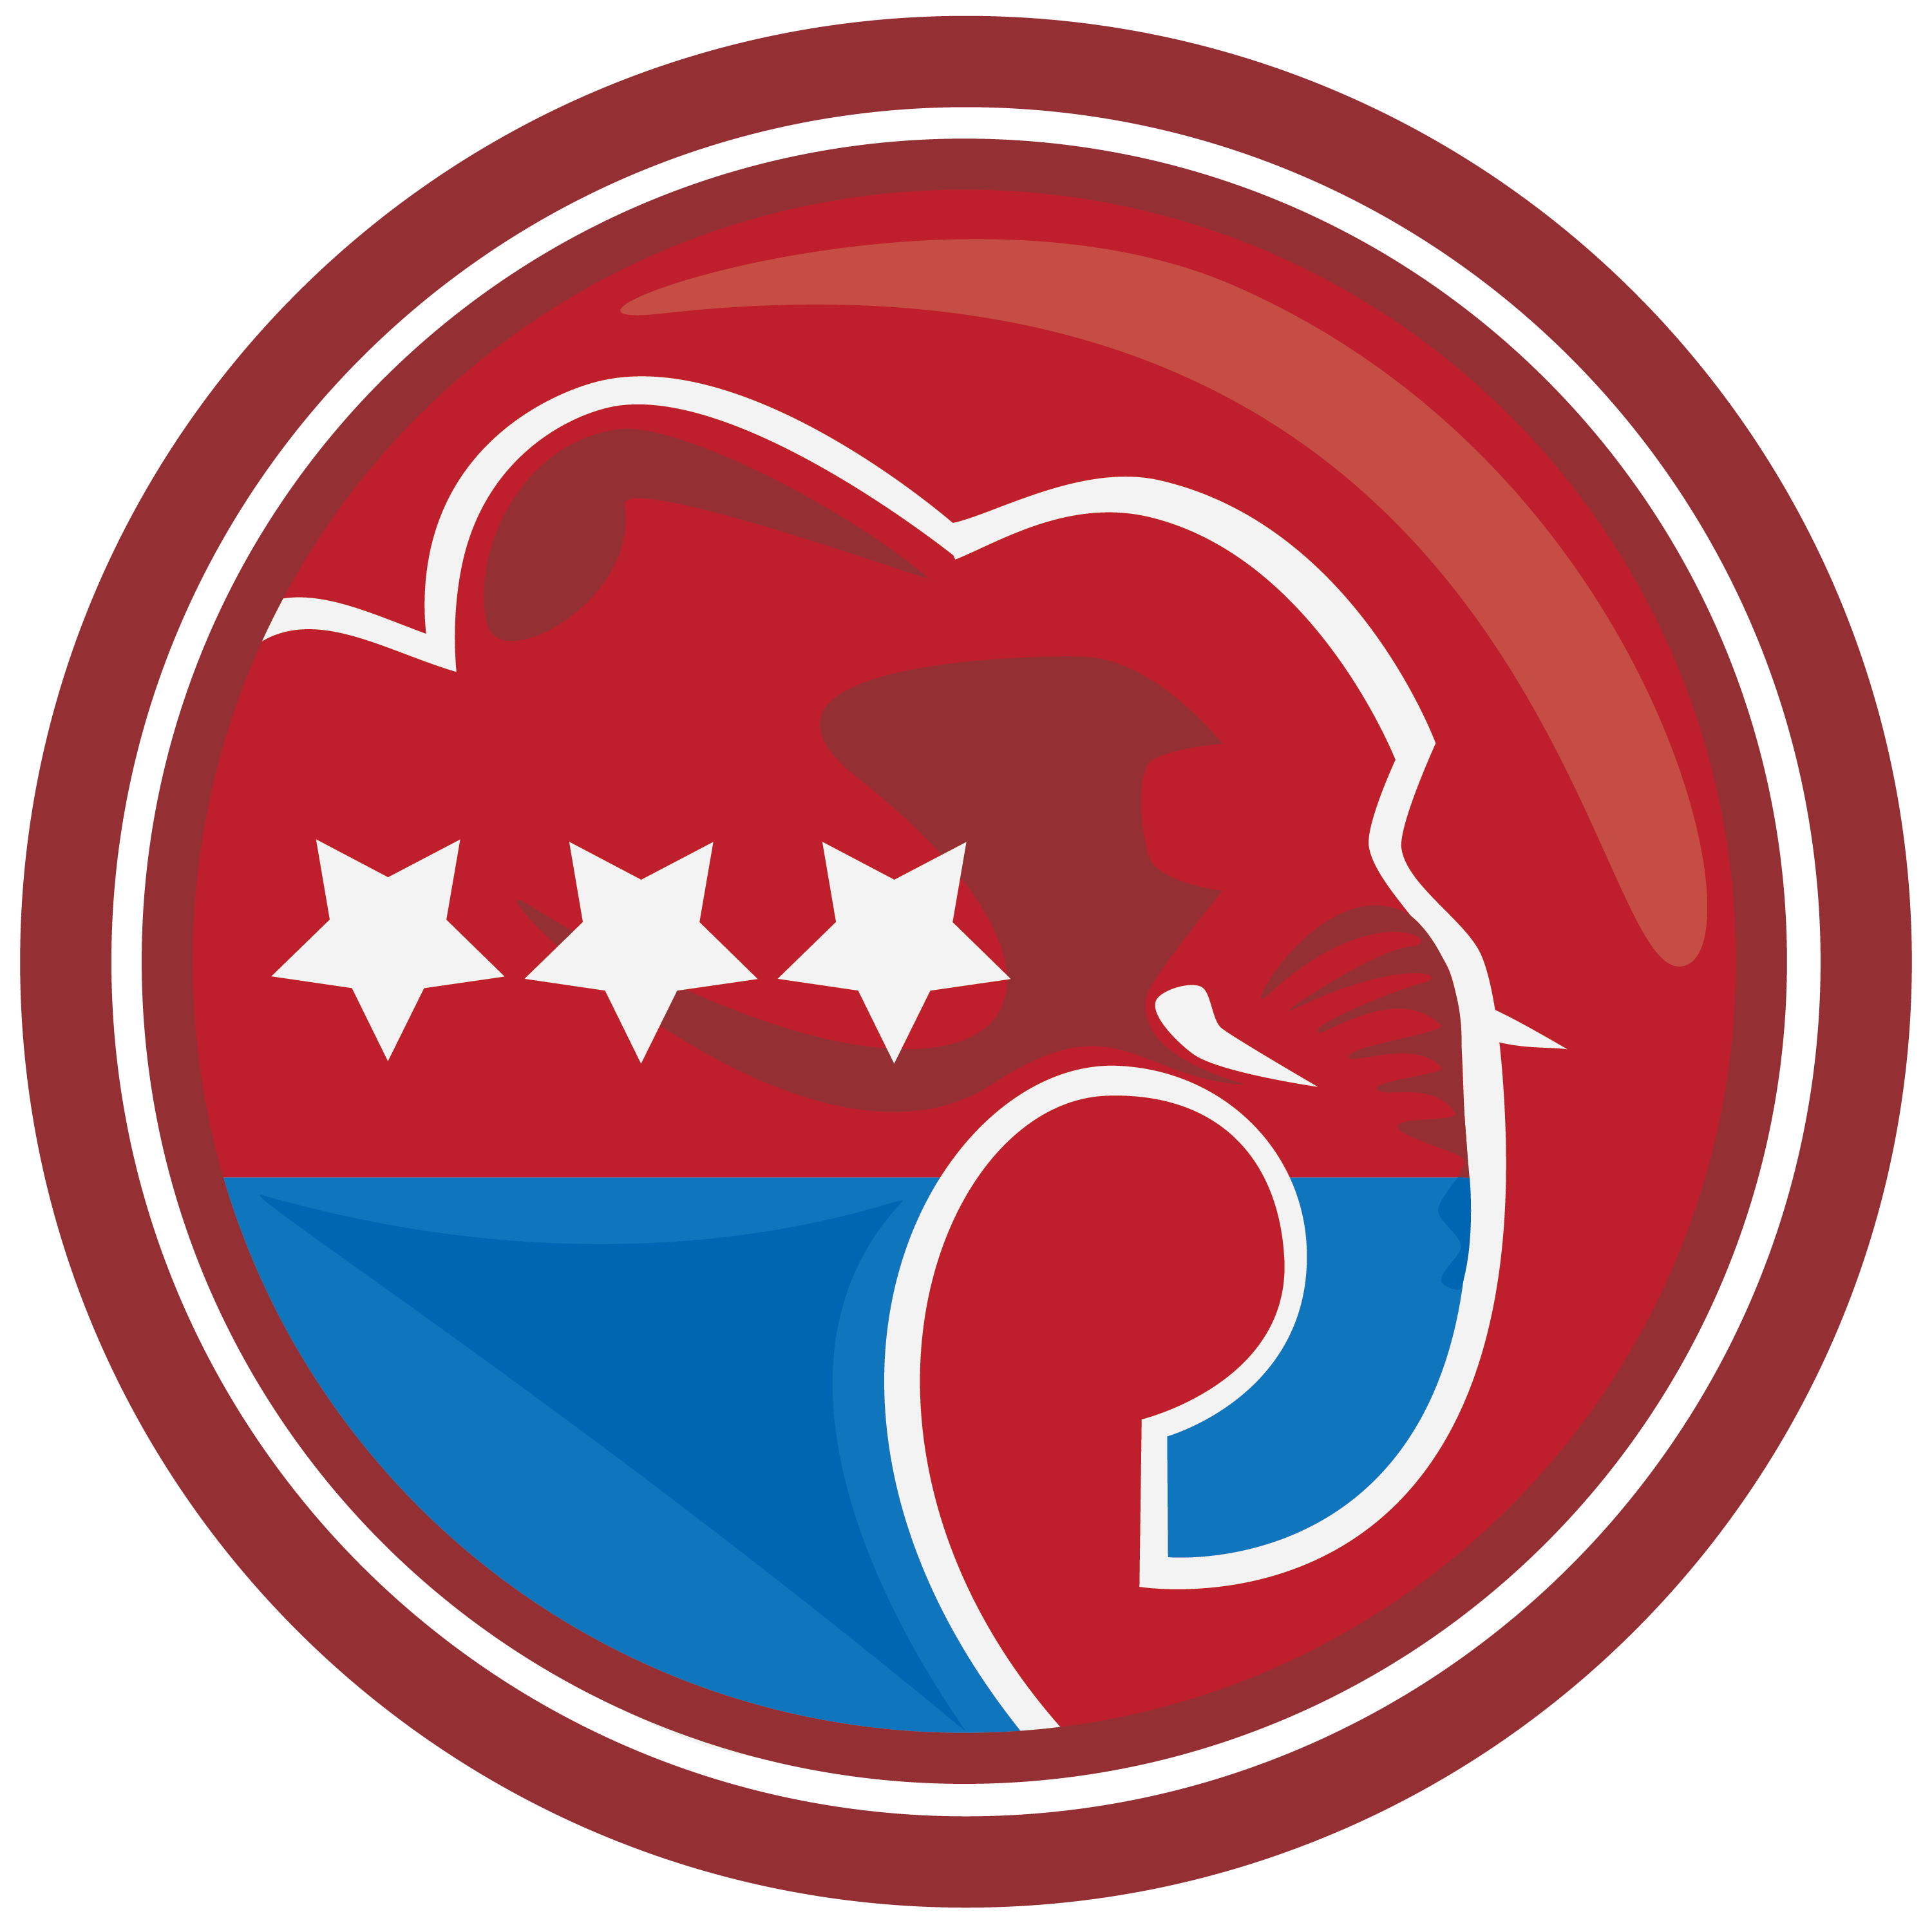 Republican Party Elephant - Cliparts.co